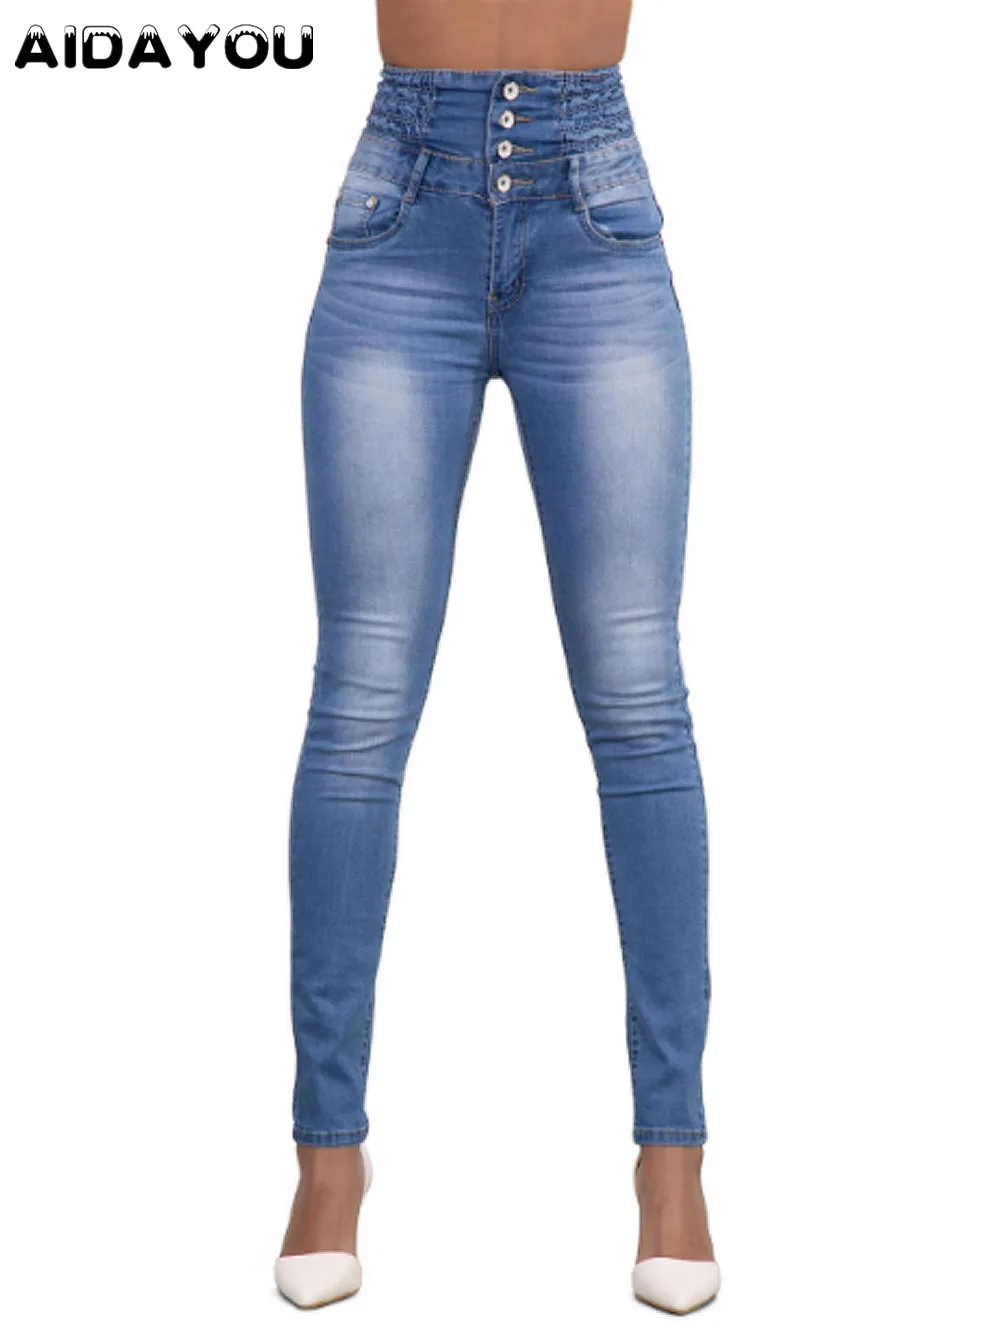 Colombian Jeans, High Waist Colombian Jeans